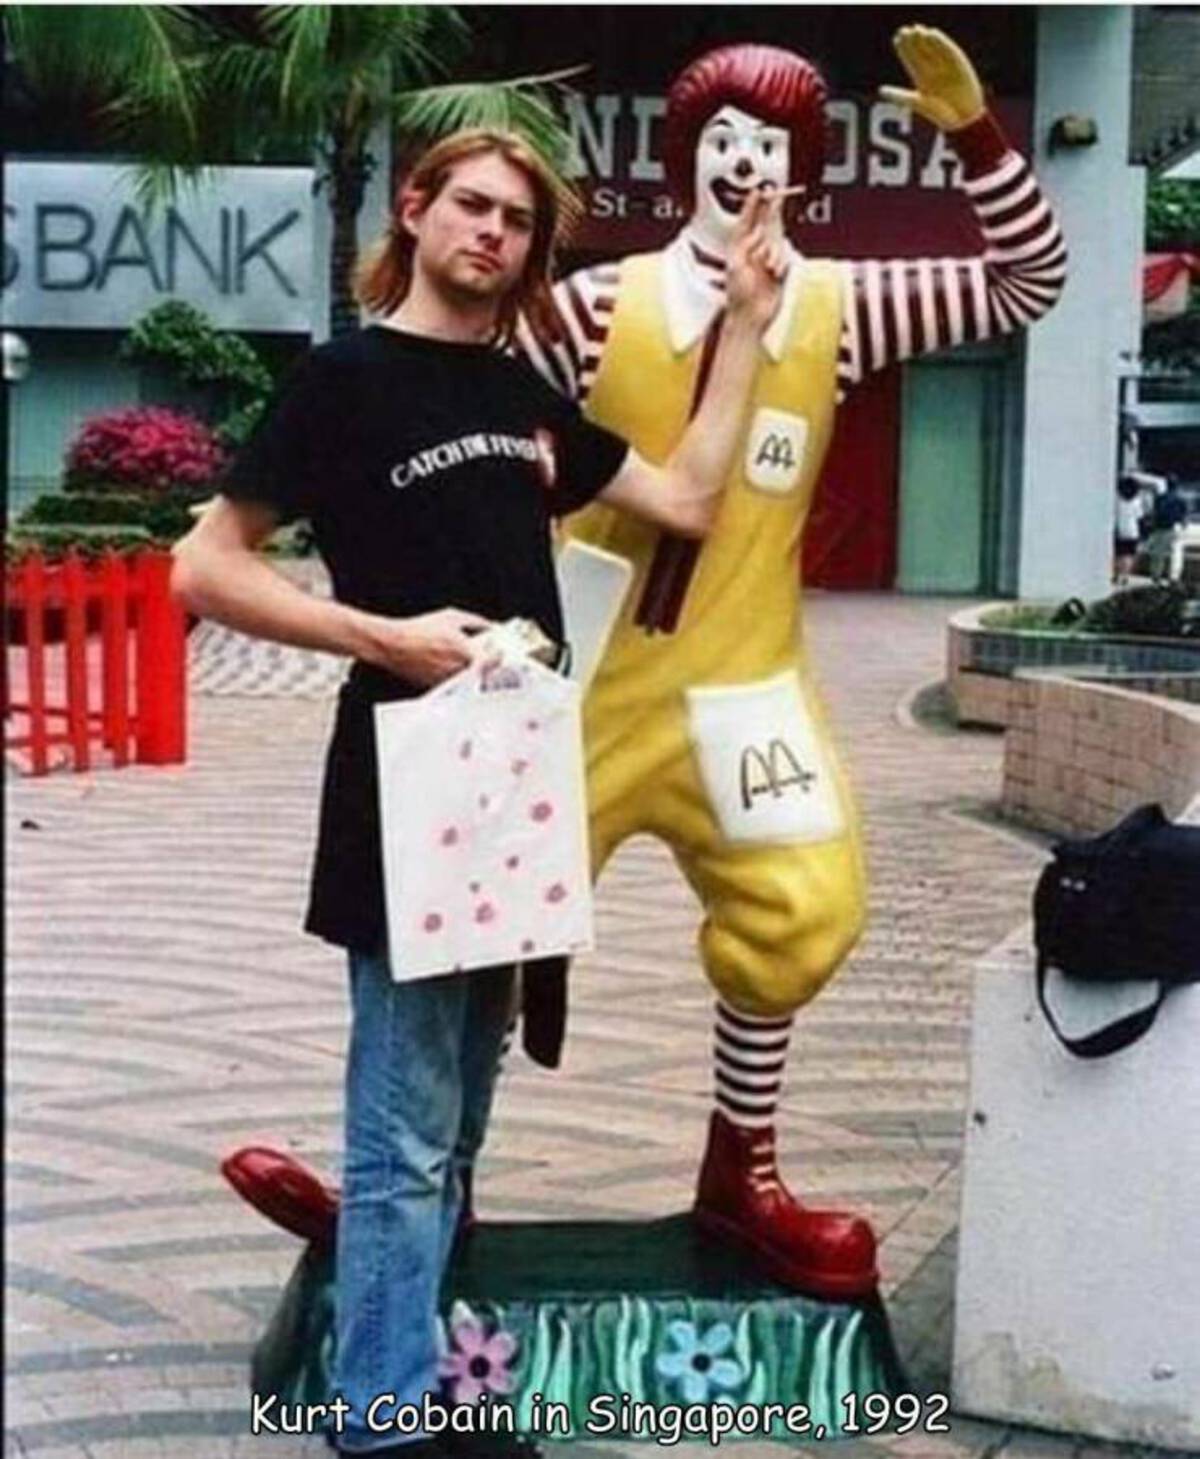 kurt cobain in singapore - Bank Catchde Foor Wisk Ni Sta. Aa A4 Kurt Cobain in Singapore, 1992